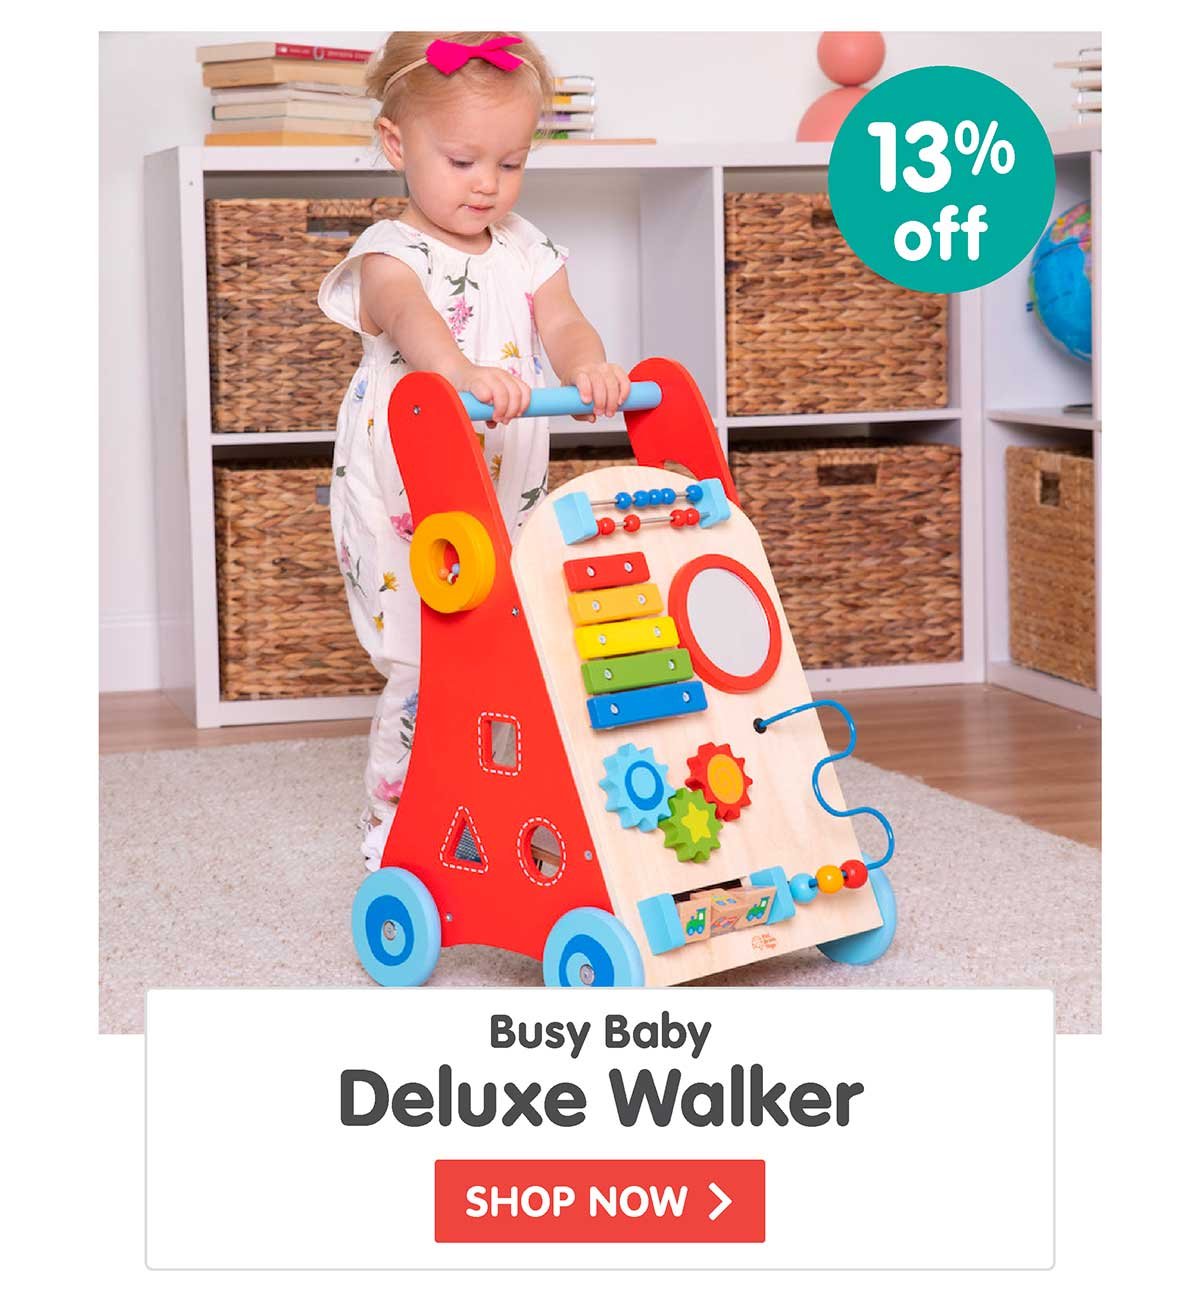 Busy Baby Deluxe Walker